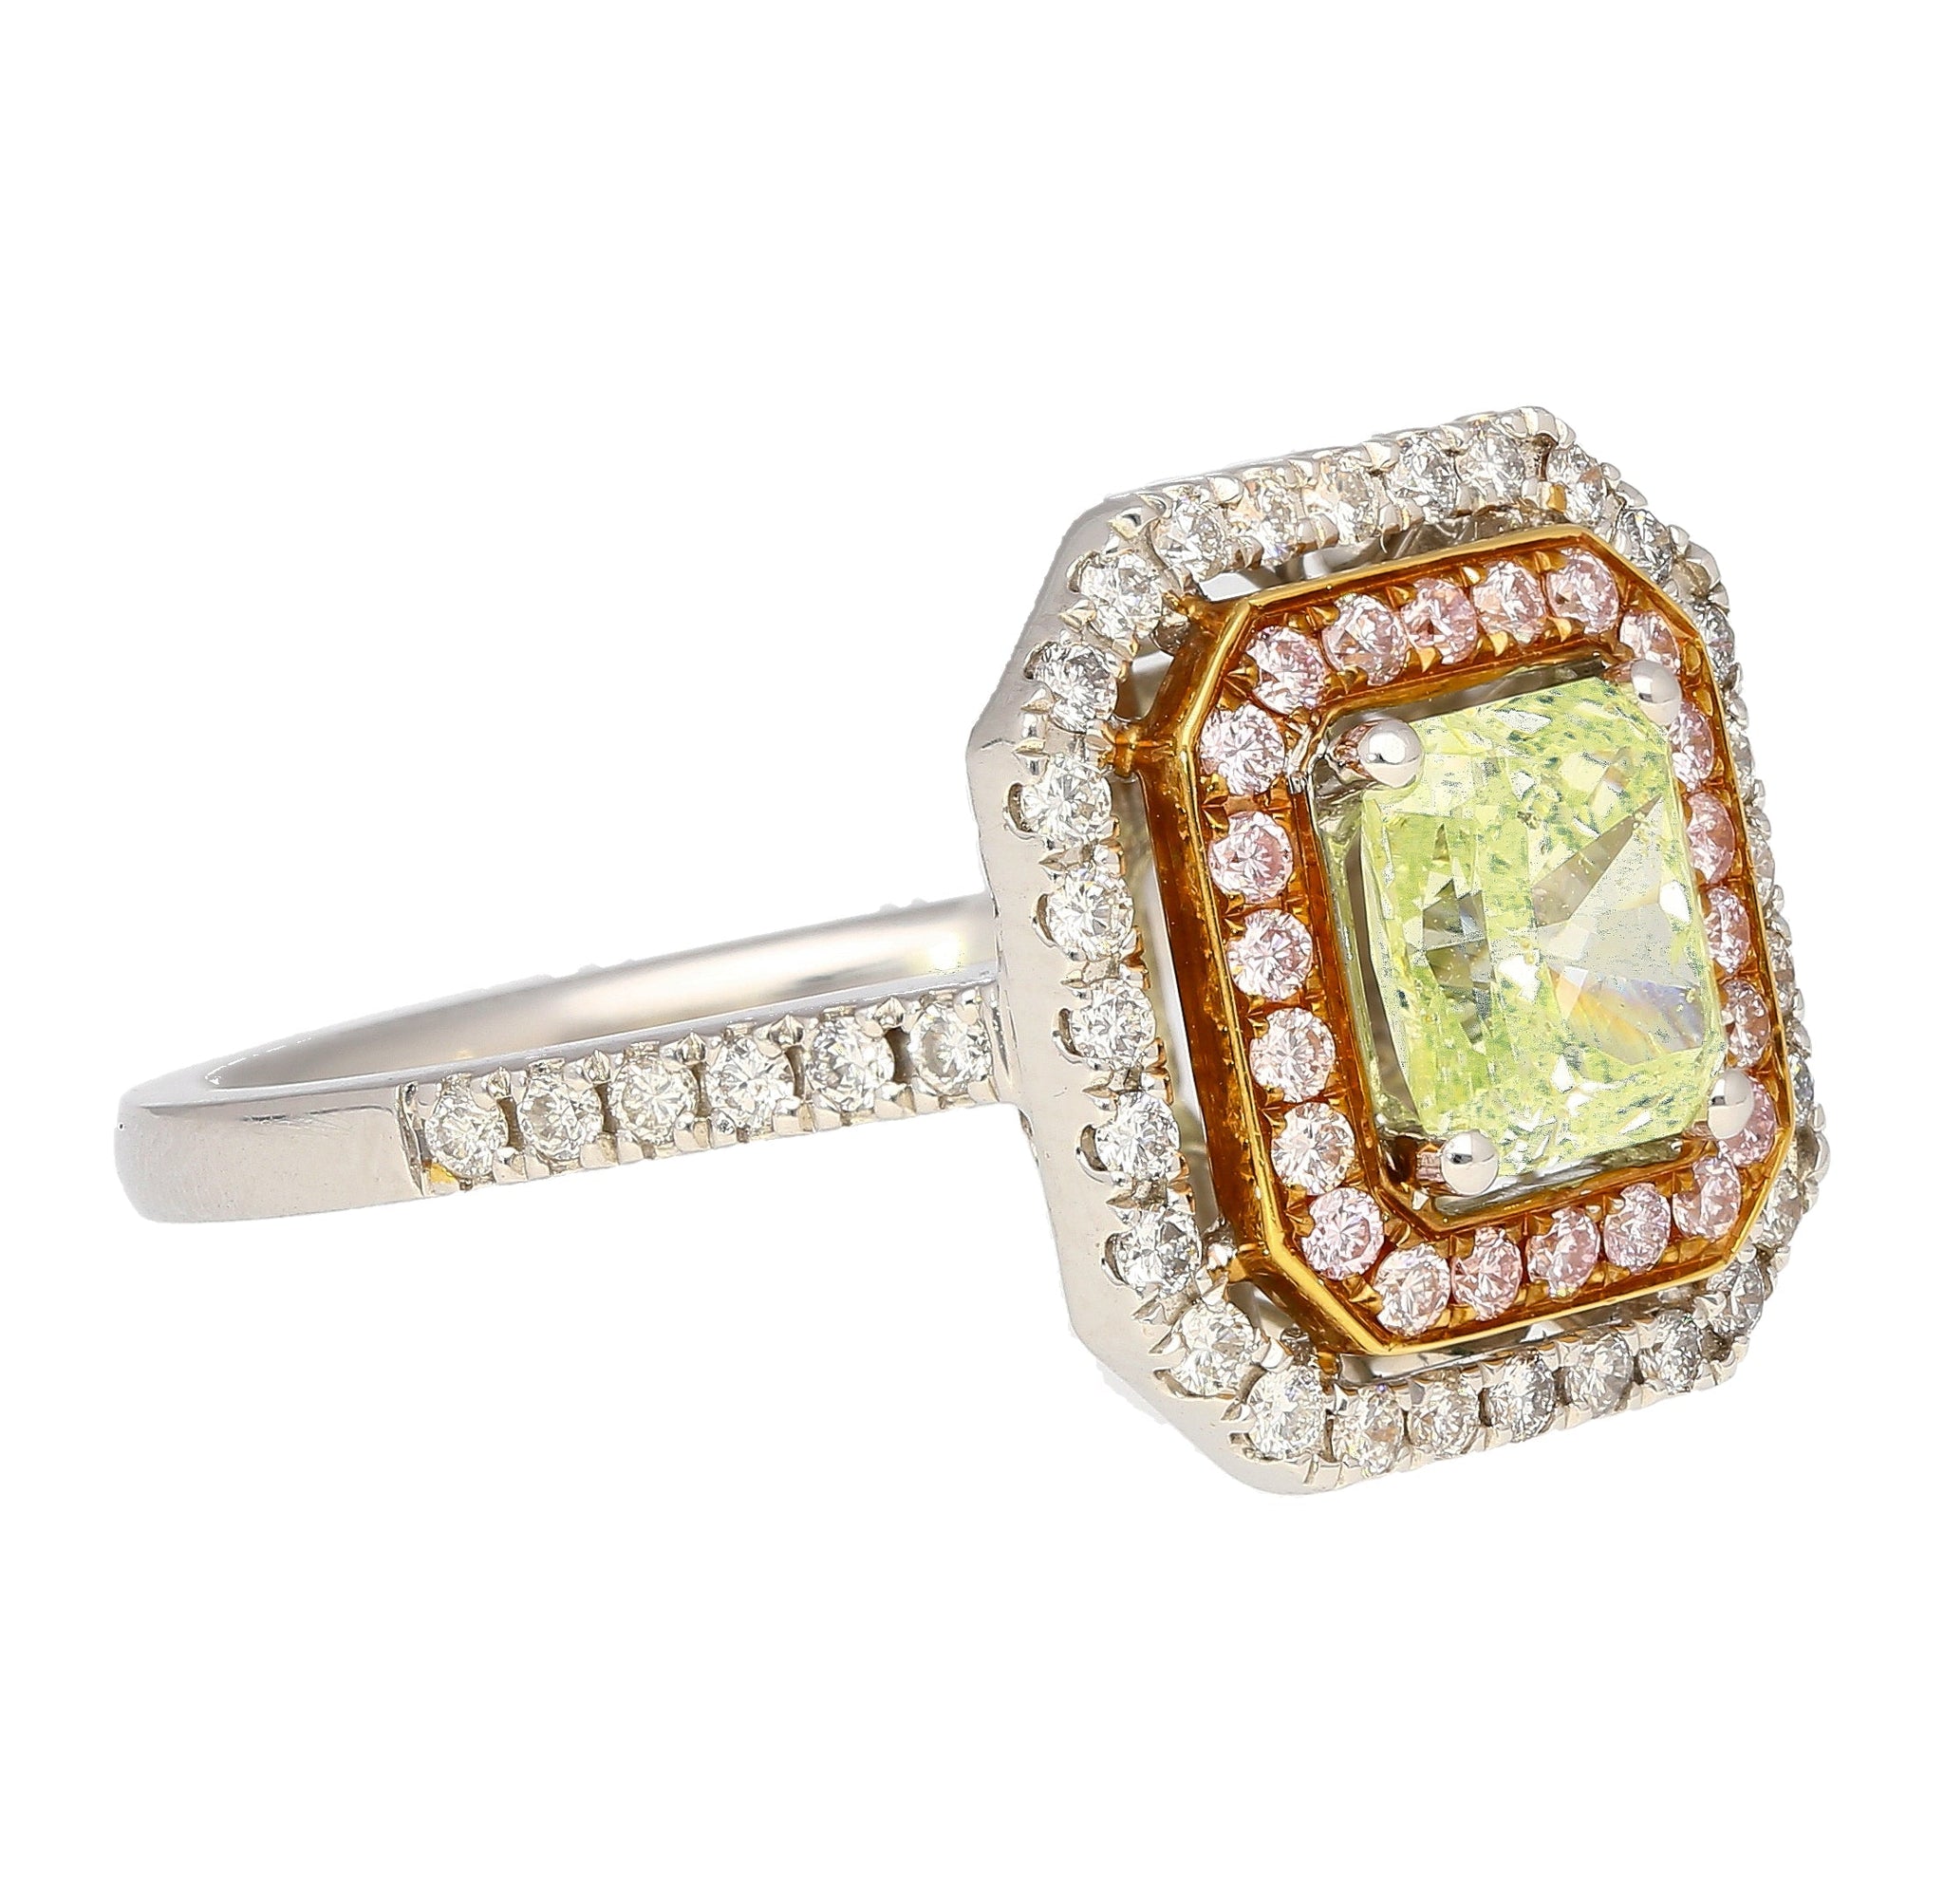 GIA Certified 1.12 carat Radiant Cut Fancy Light Green-Yellow Diamond and Diamond Halo Ring